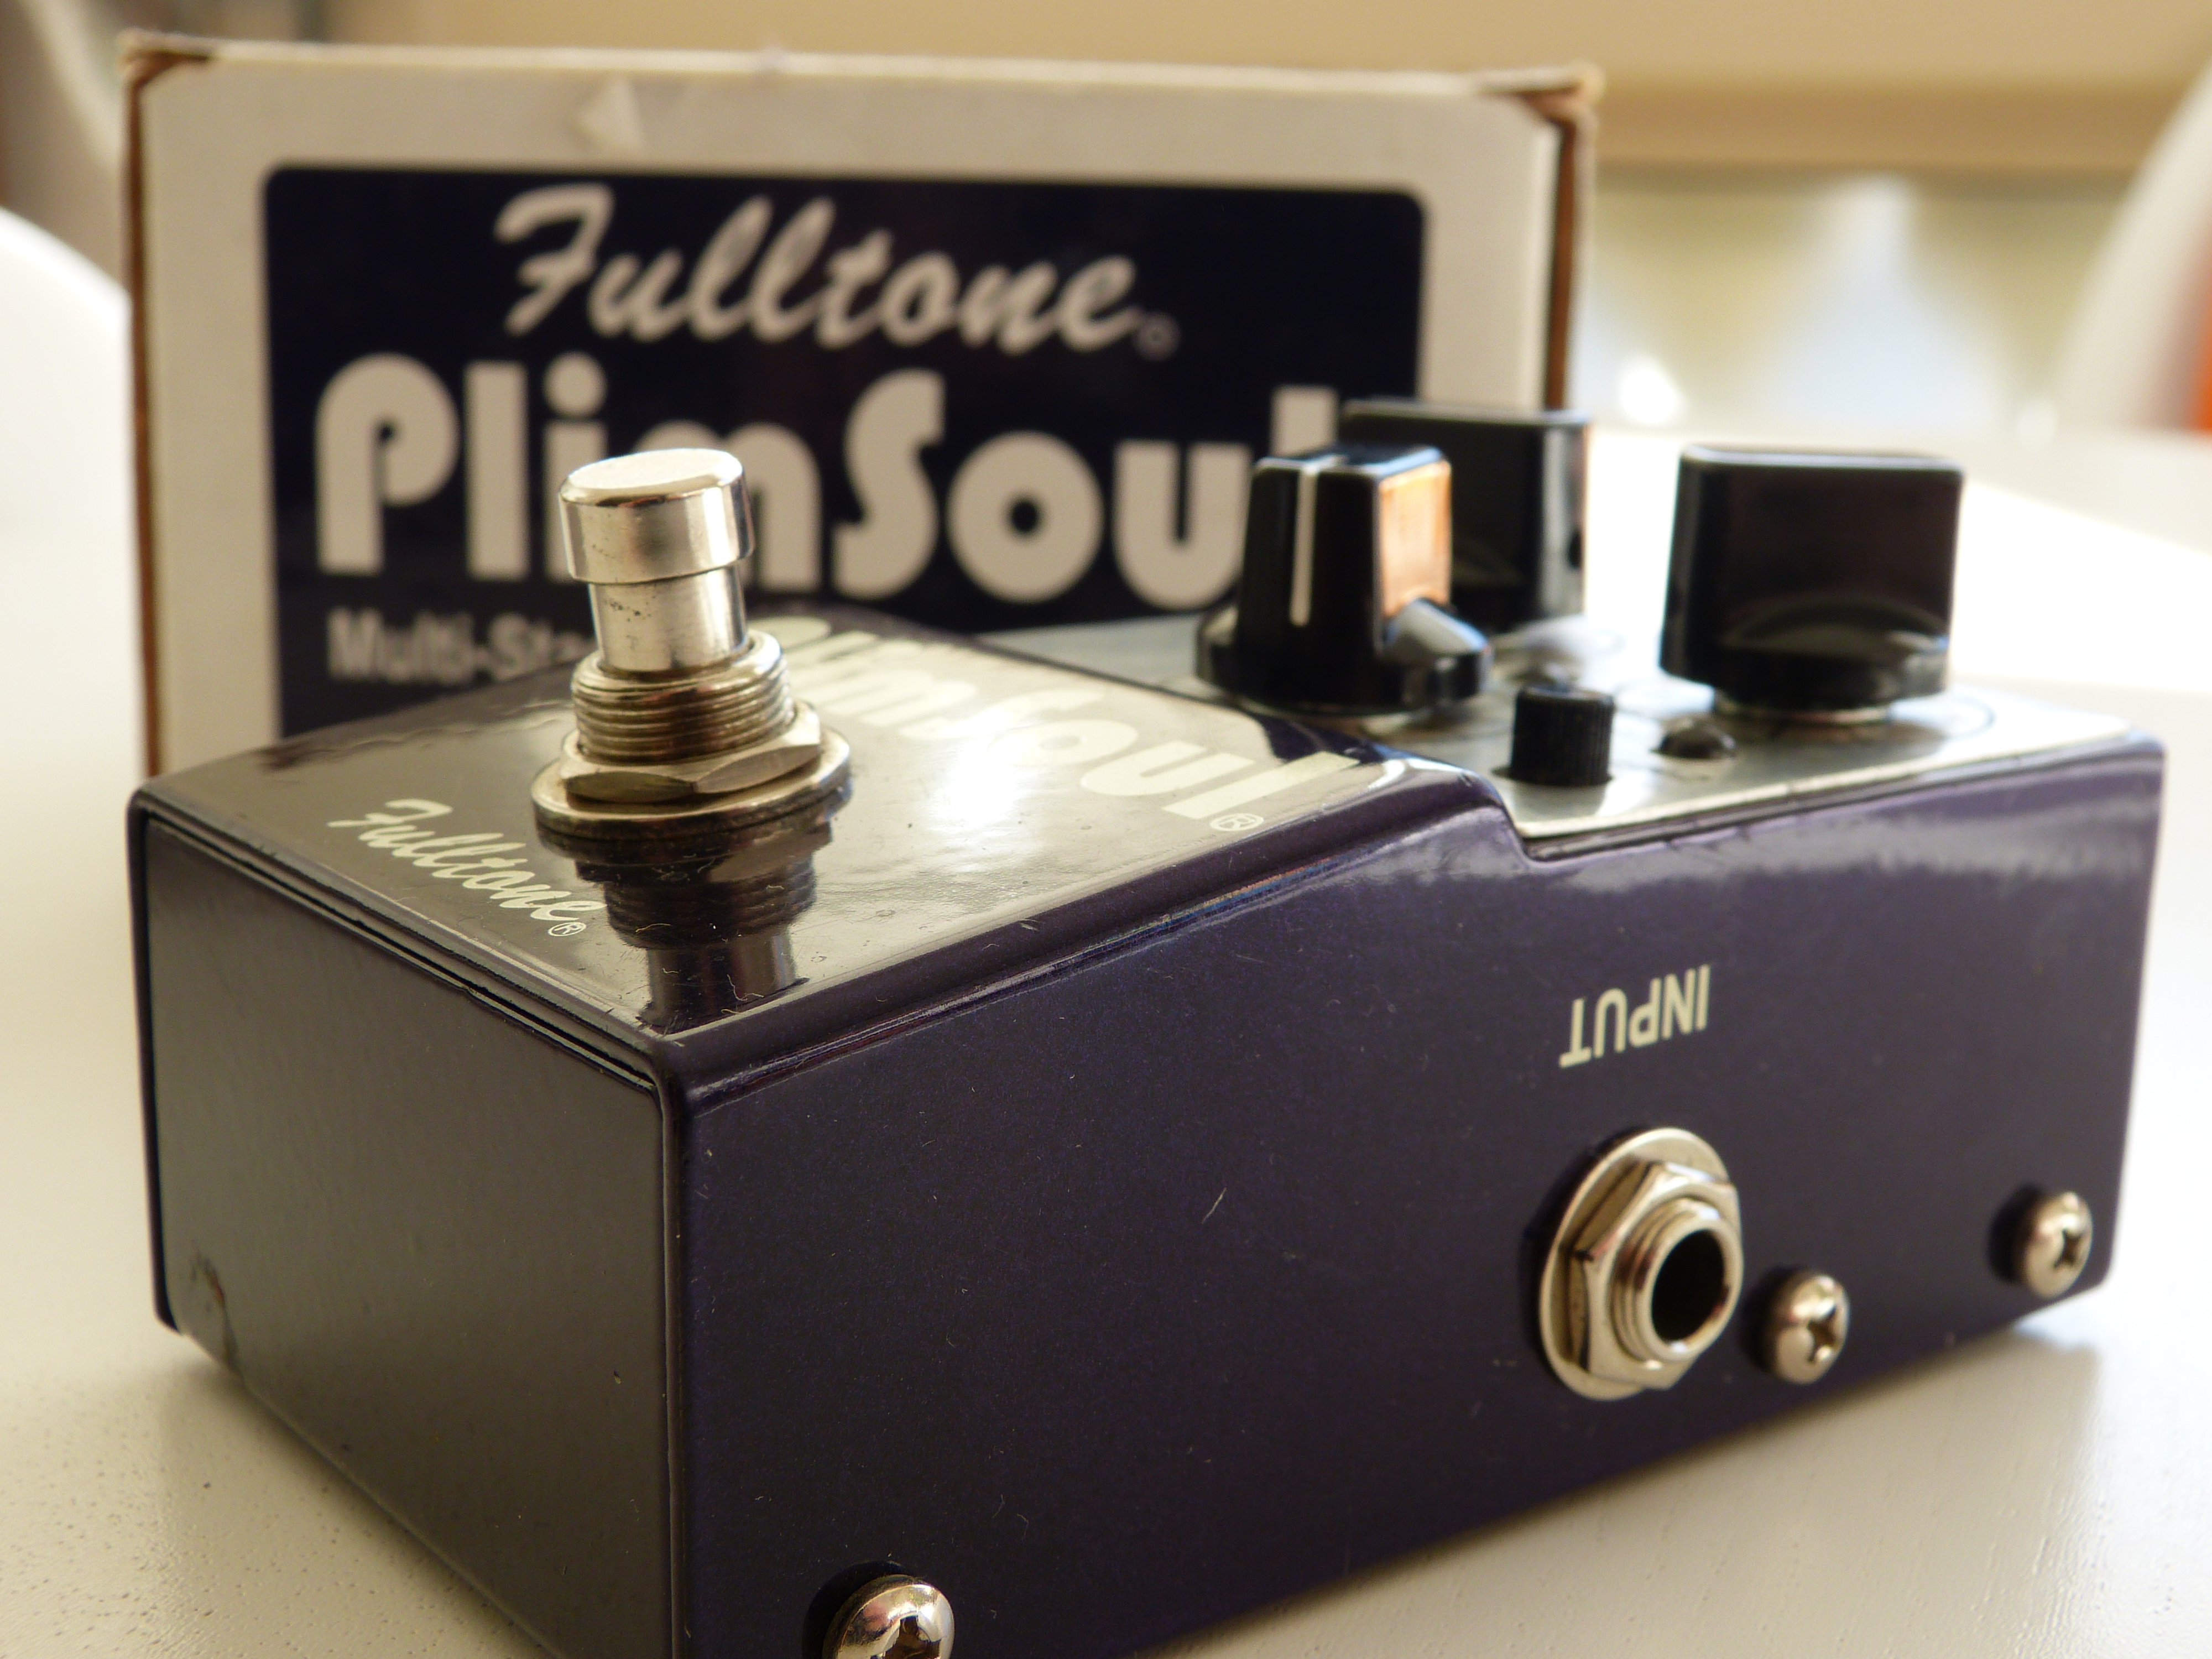 PLIMSOUL - Fulltone PlimSoul - Audiofanzine